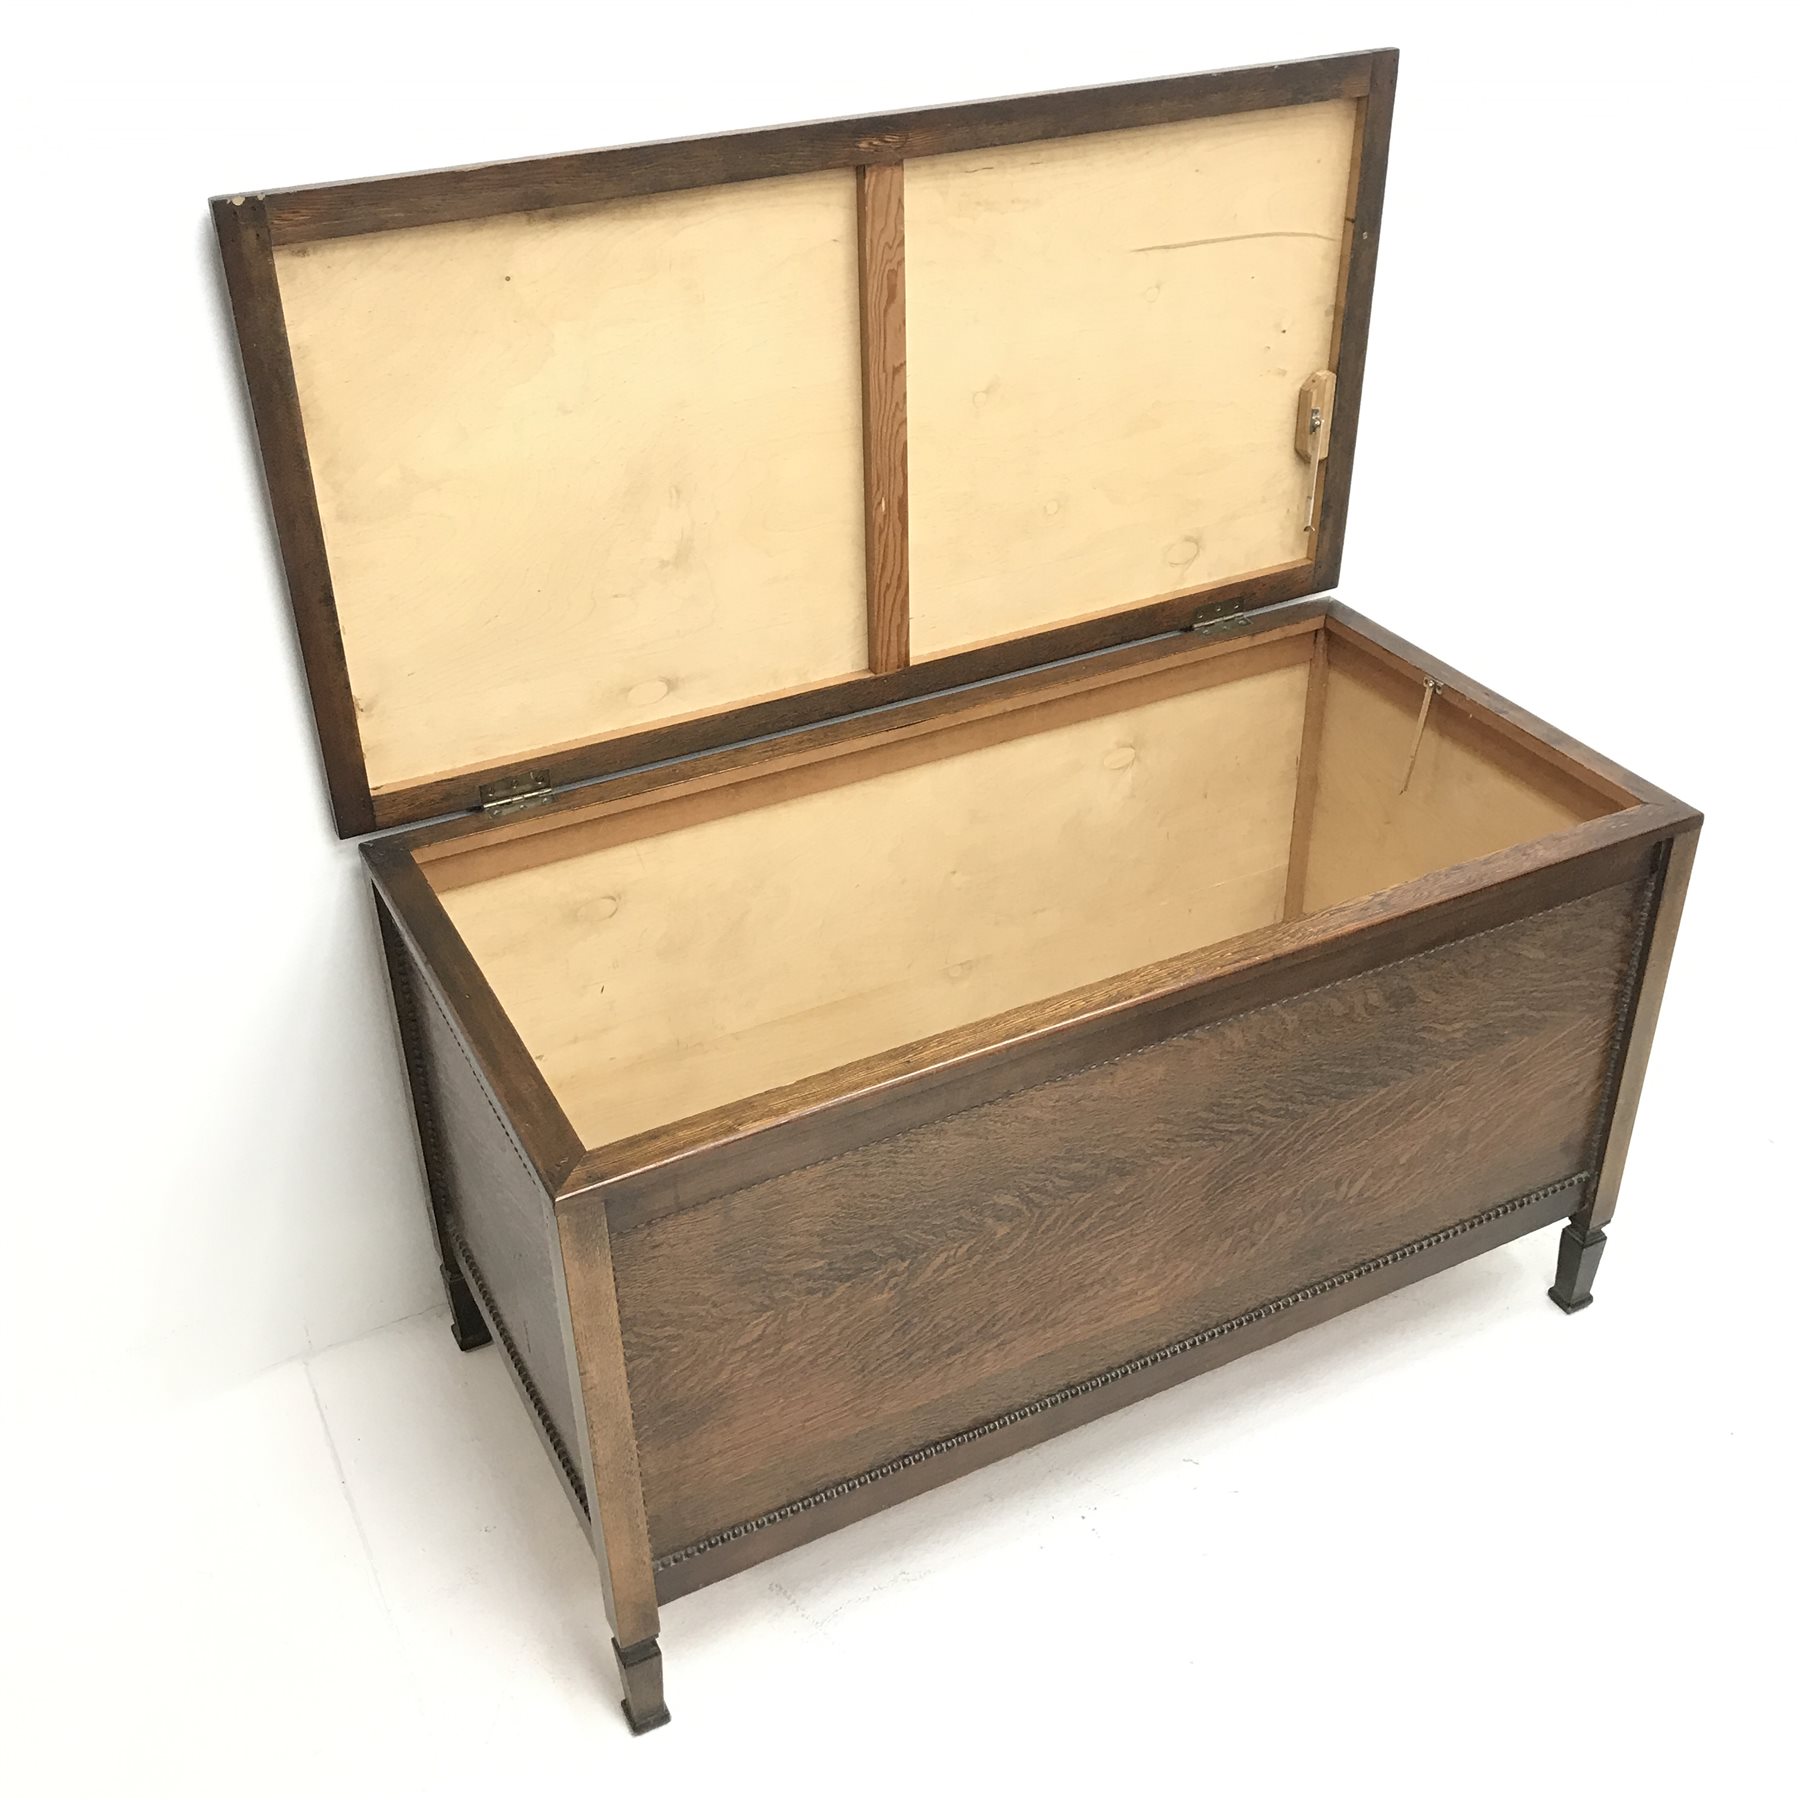 Early 20th century oak blanket box, single hinged lid, W110cm, H63cm, D55cm - Image 3 of 5